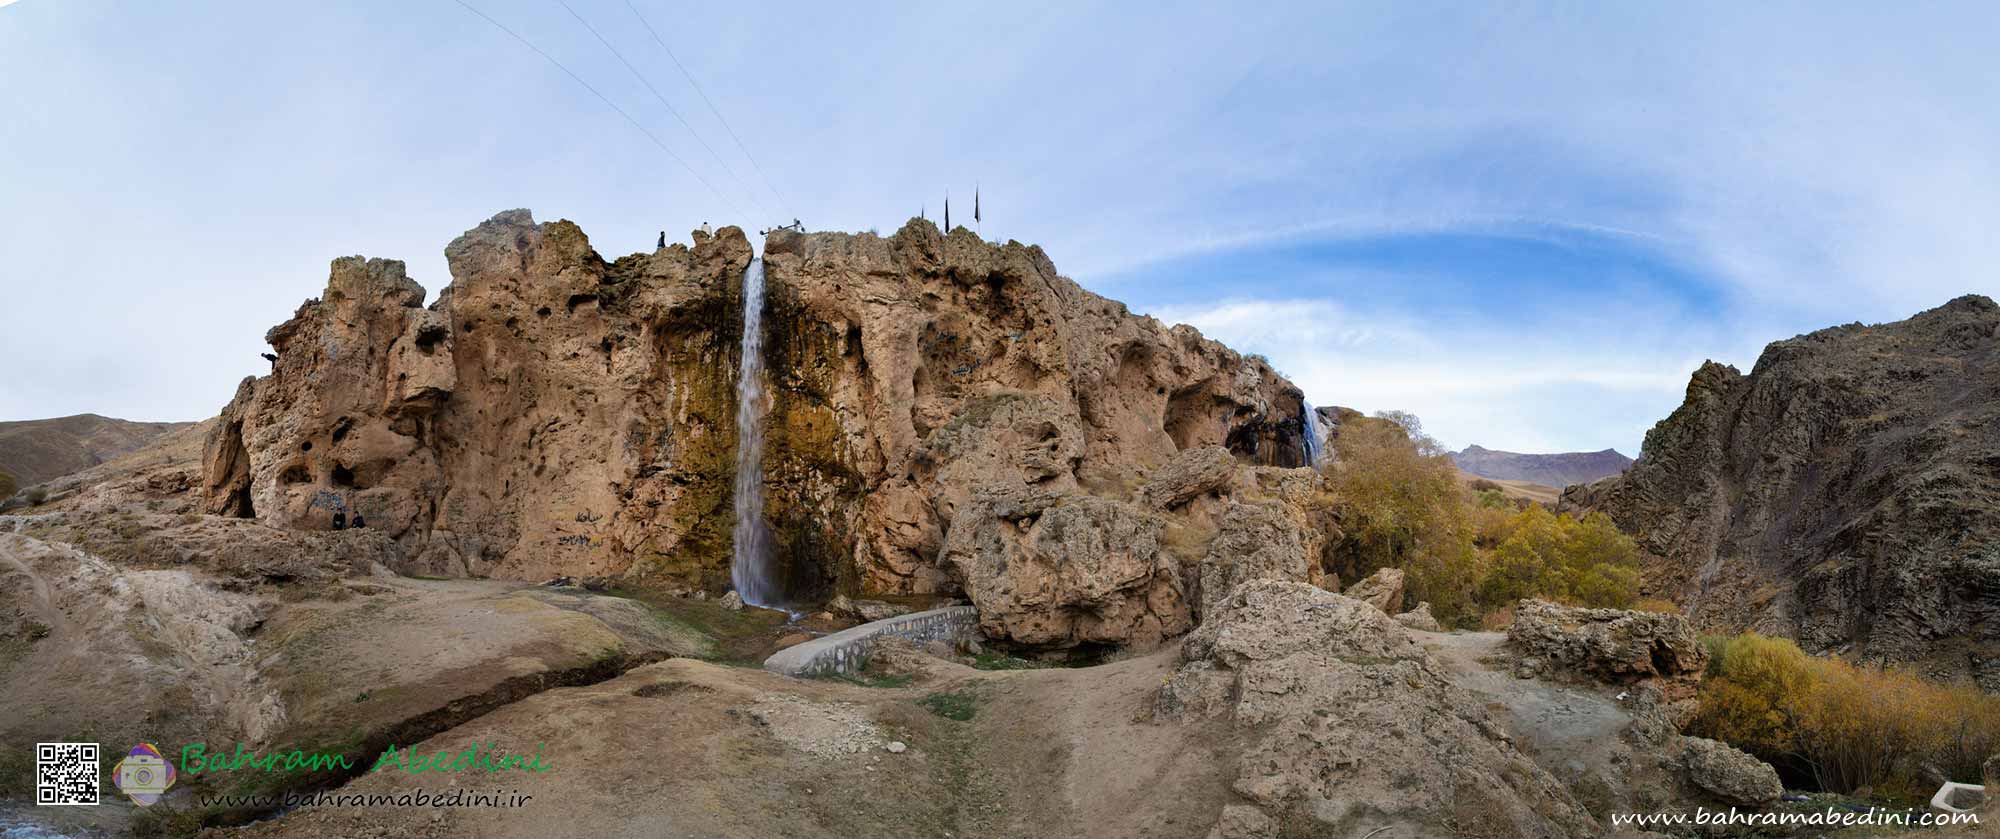 Linear Panorama photography of Ghiranje waterfall